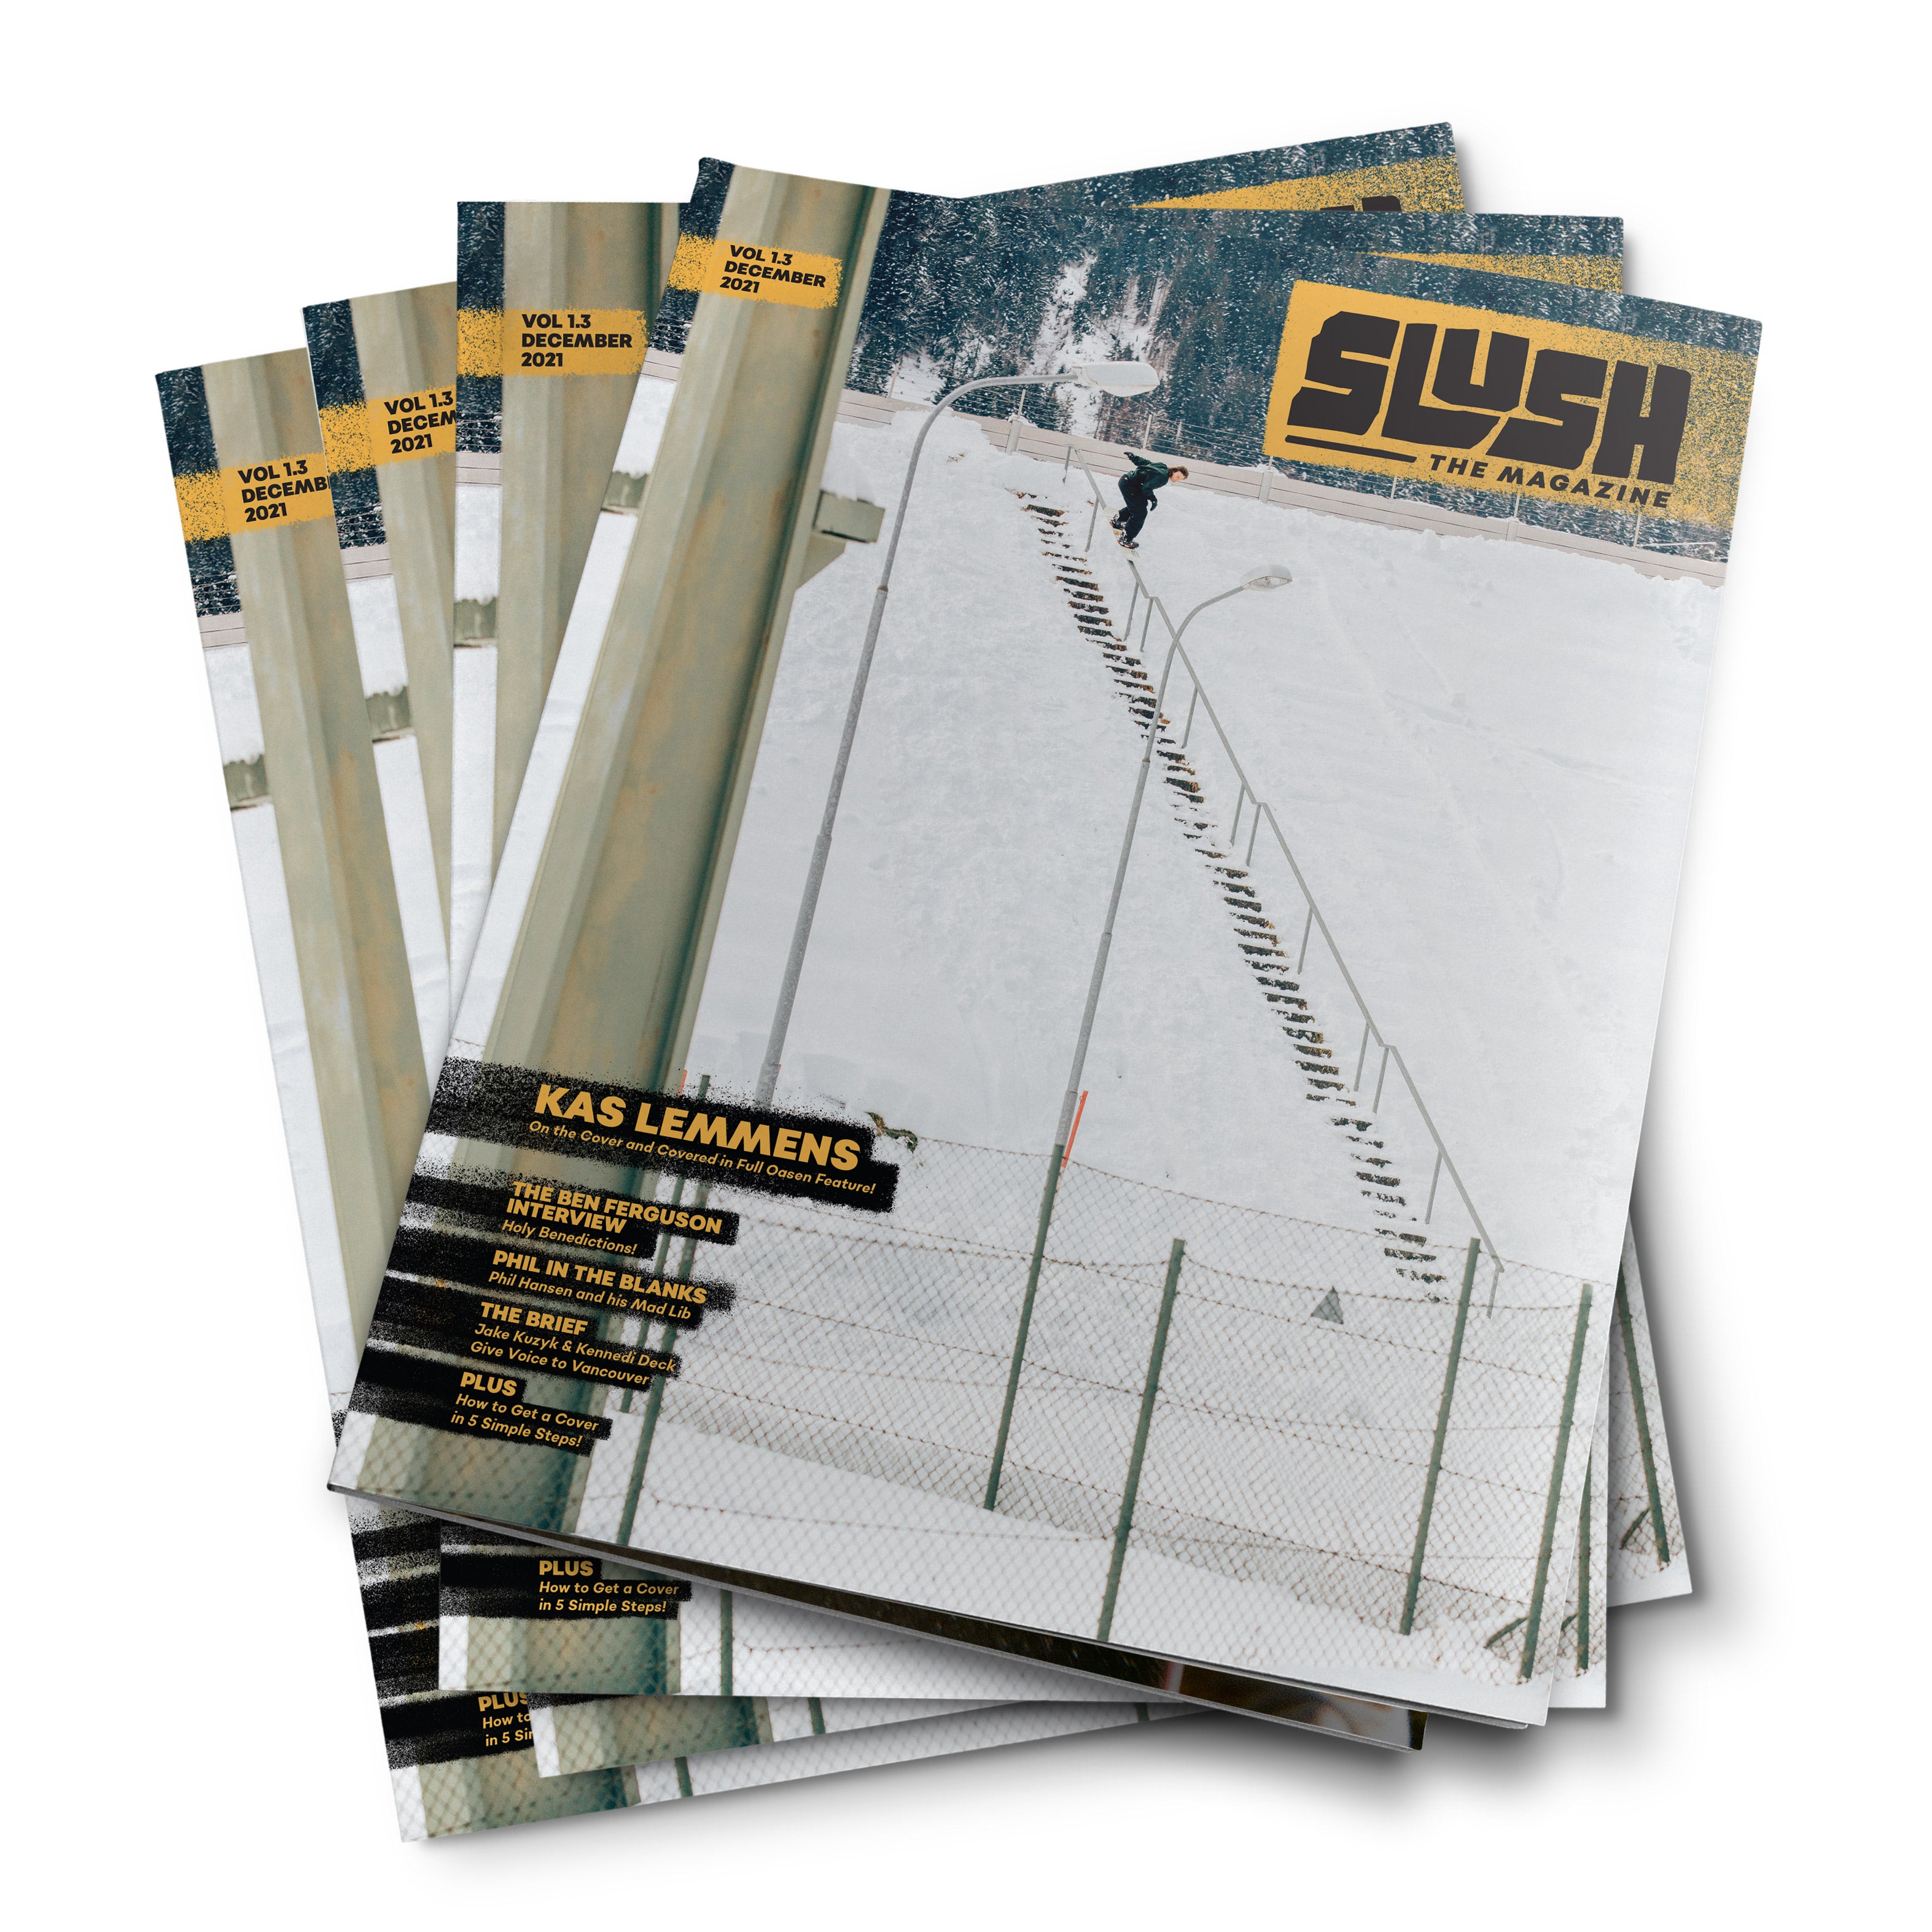 SLUSH THE MAGAZINE - Volume 1 Issue 3 - December 2021